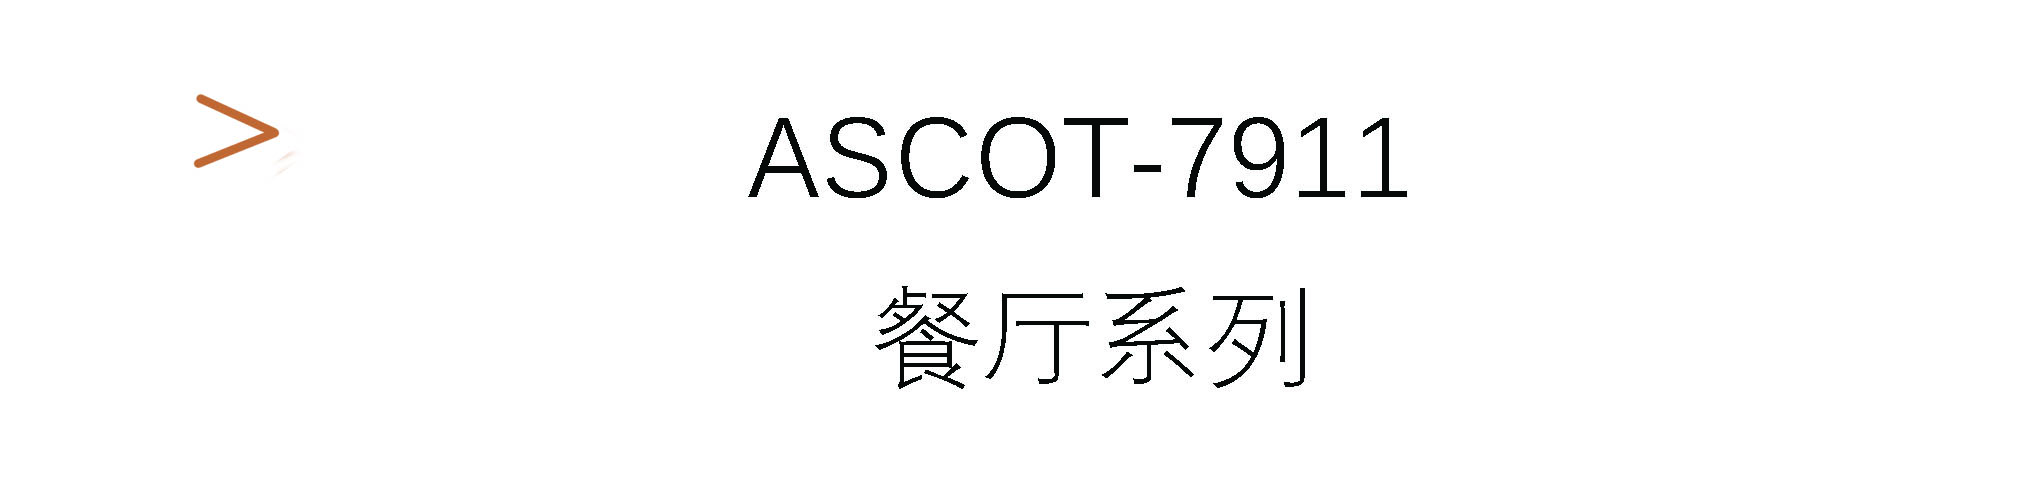 Ascot-7911